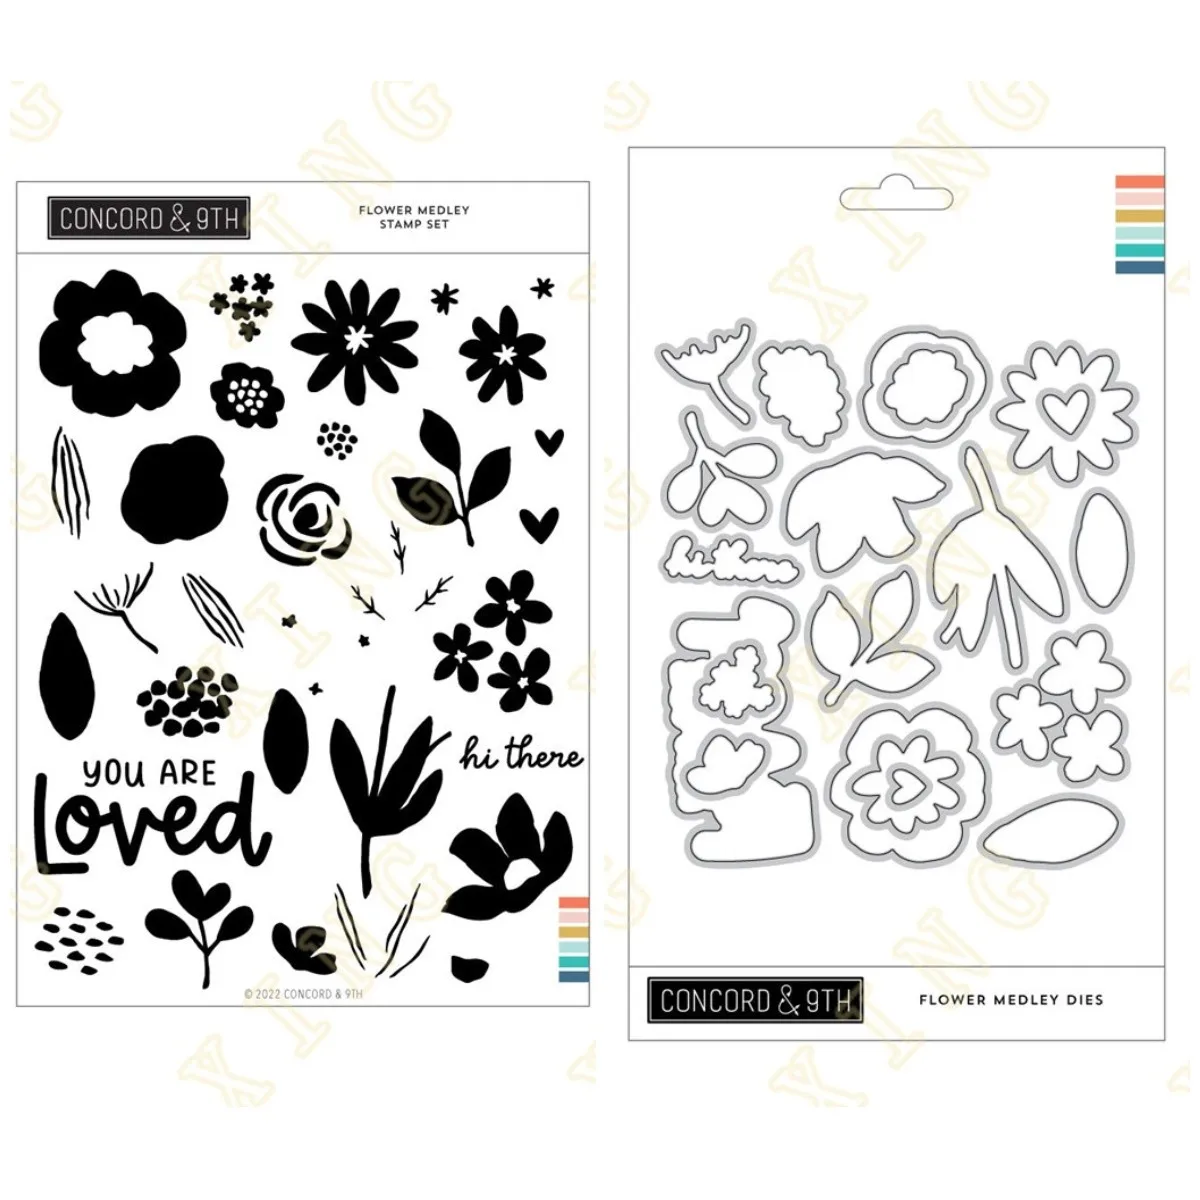 

Flower Medley New Metal Cutting Dies Stamps Scrapbook Diary Decoration Embossing Cut Dies Template DIY Greeting Card Handmade